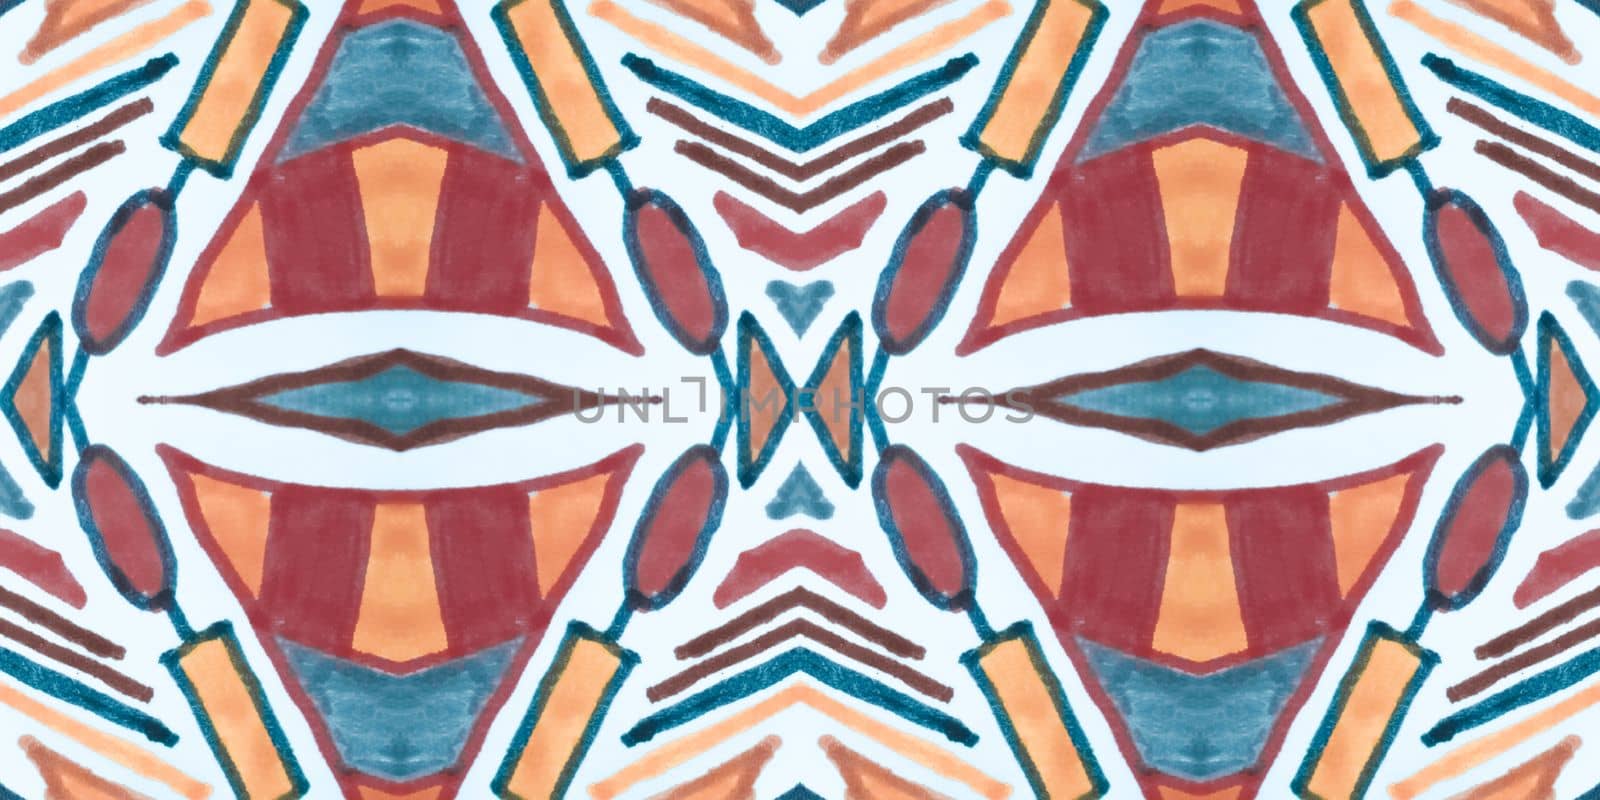 Navajo seamless pattern. Hand drawn ethnic background. by YASNARADA